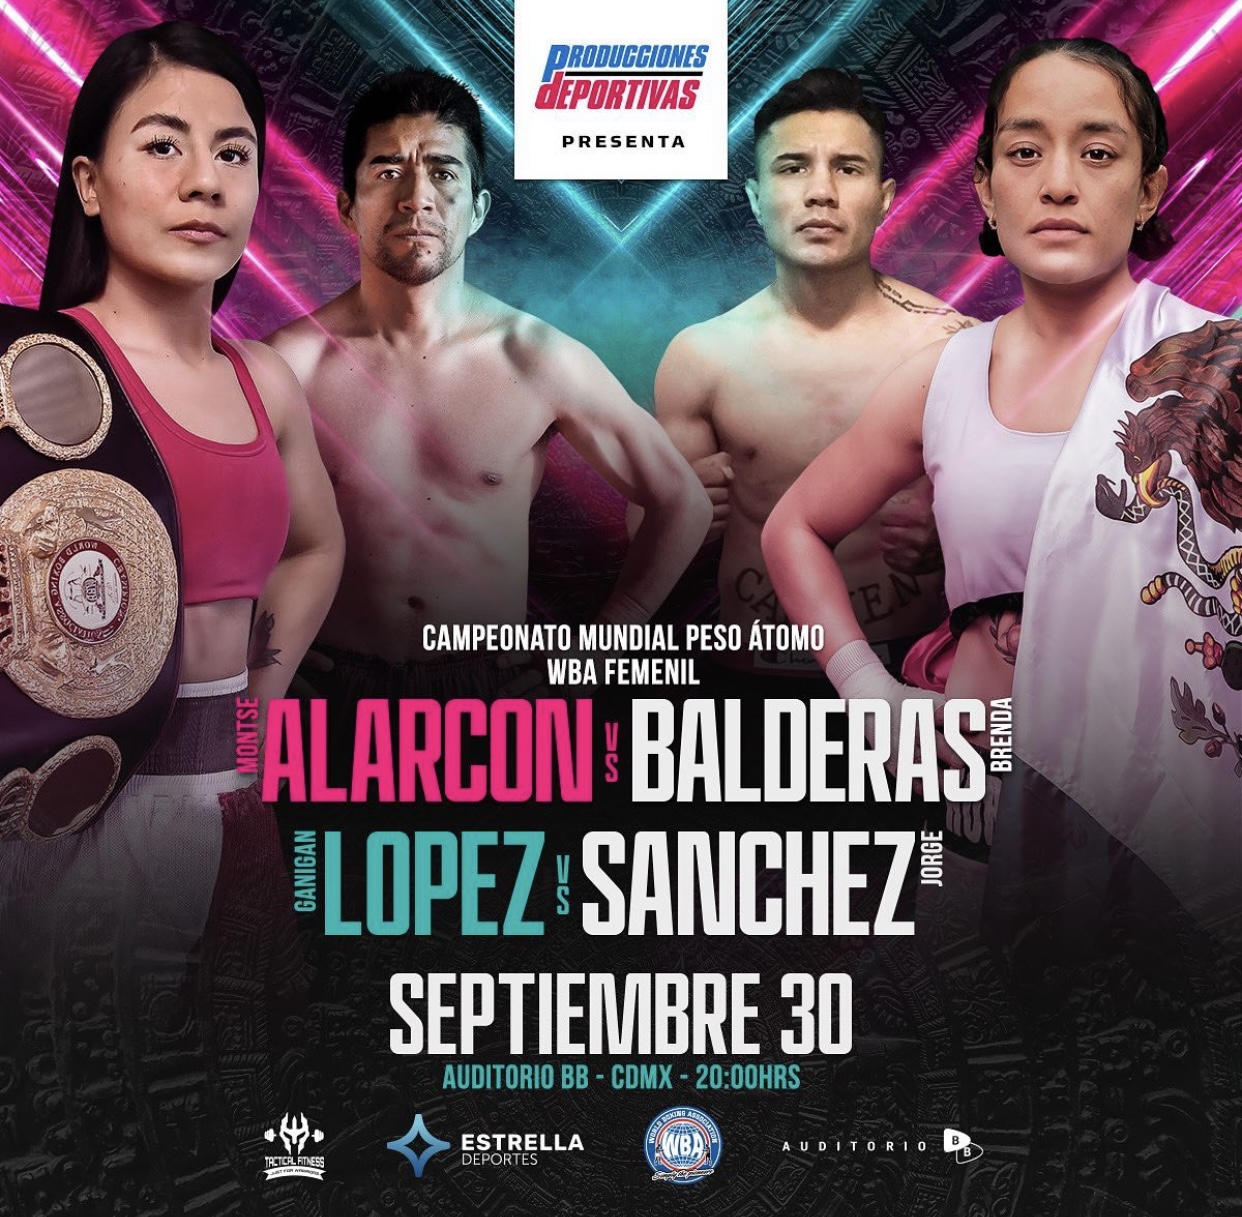 Alarcon defends her WBA belt against Balderas on September 30 in Mexico City 